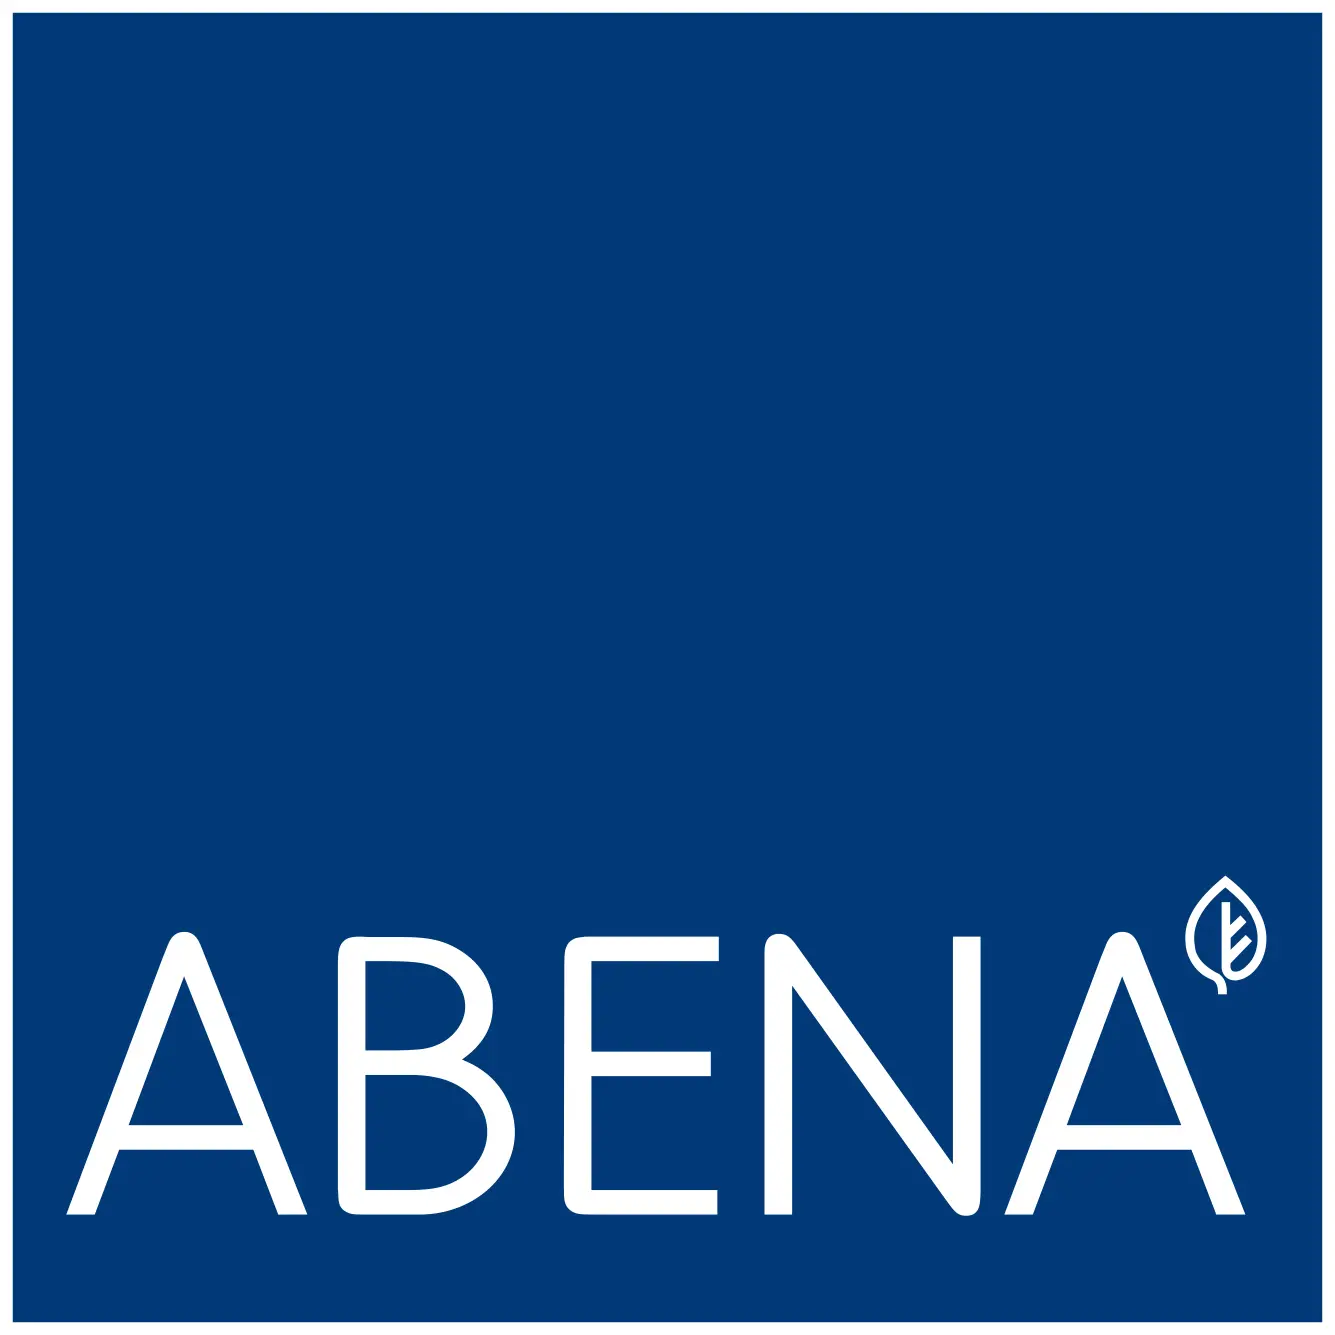 Abena-brand_HR1